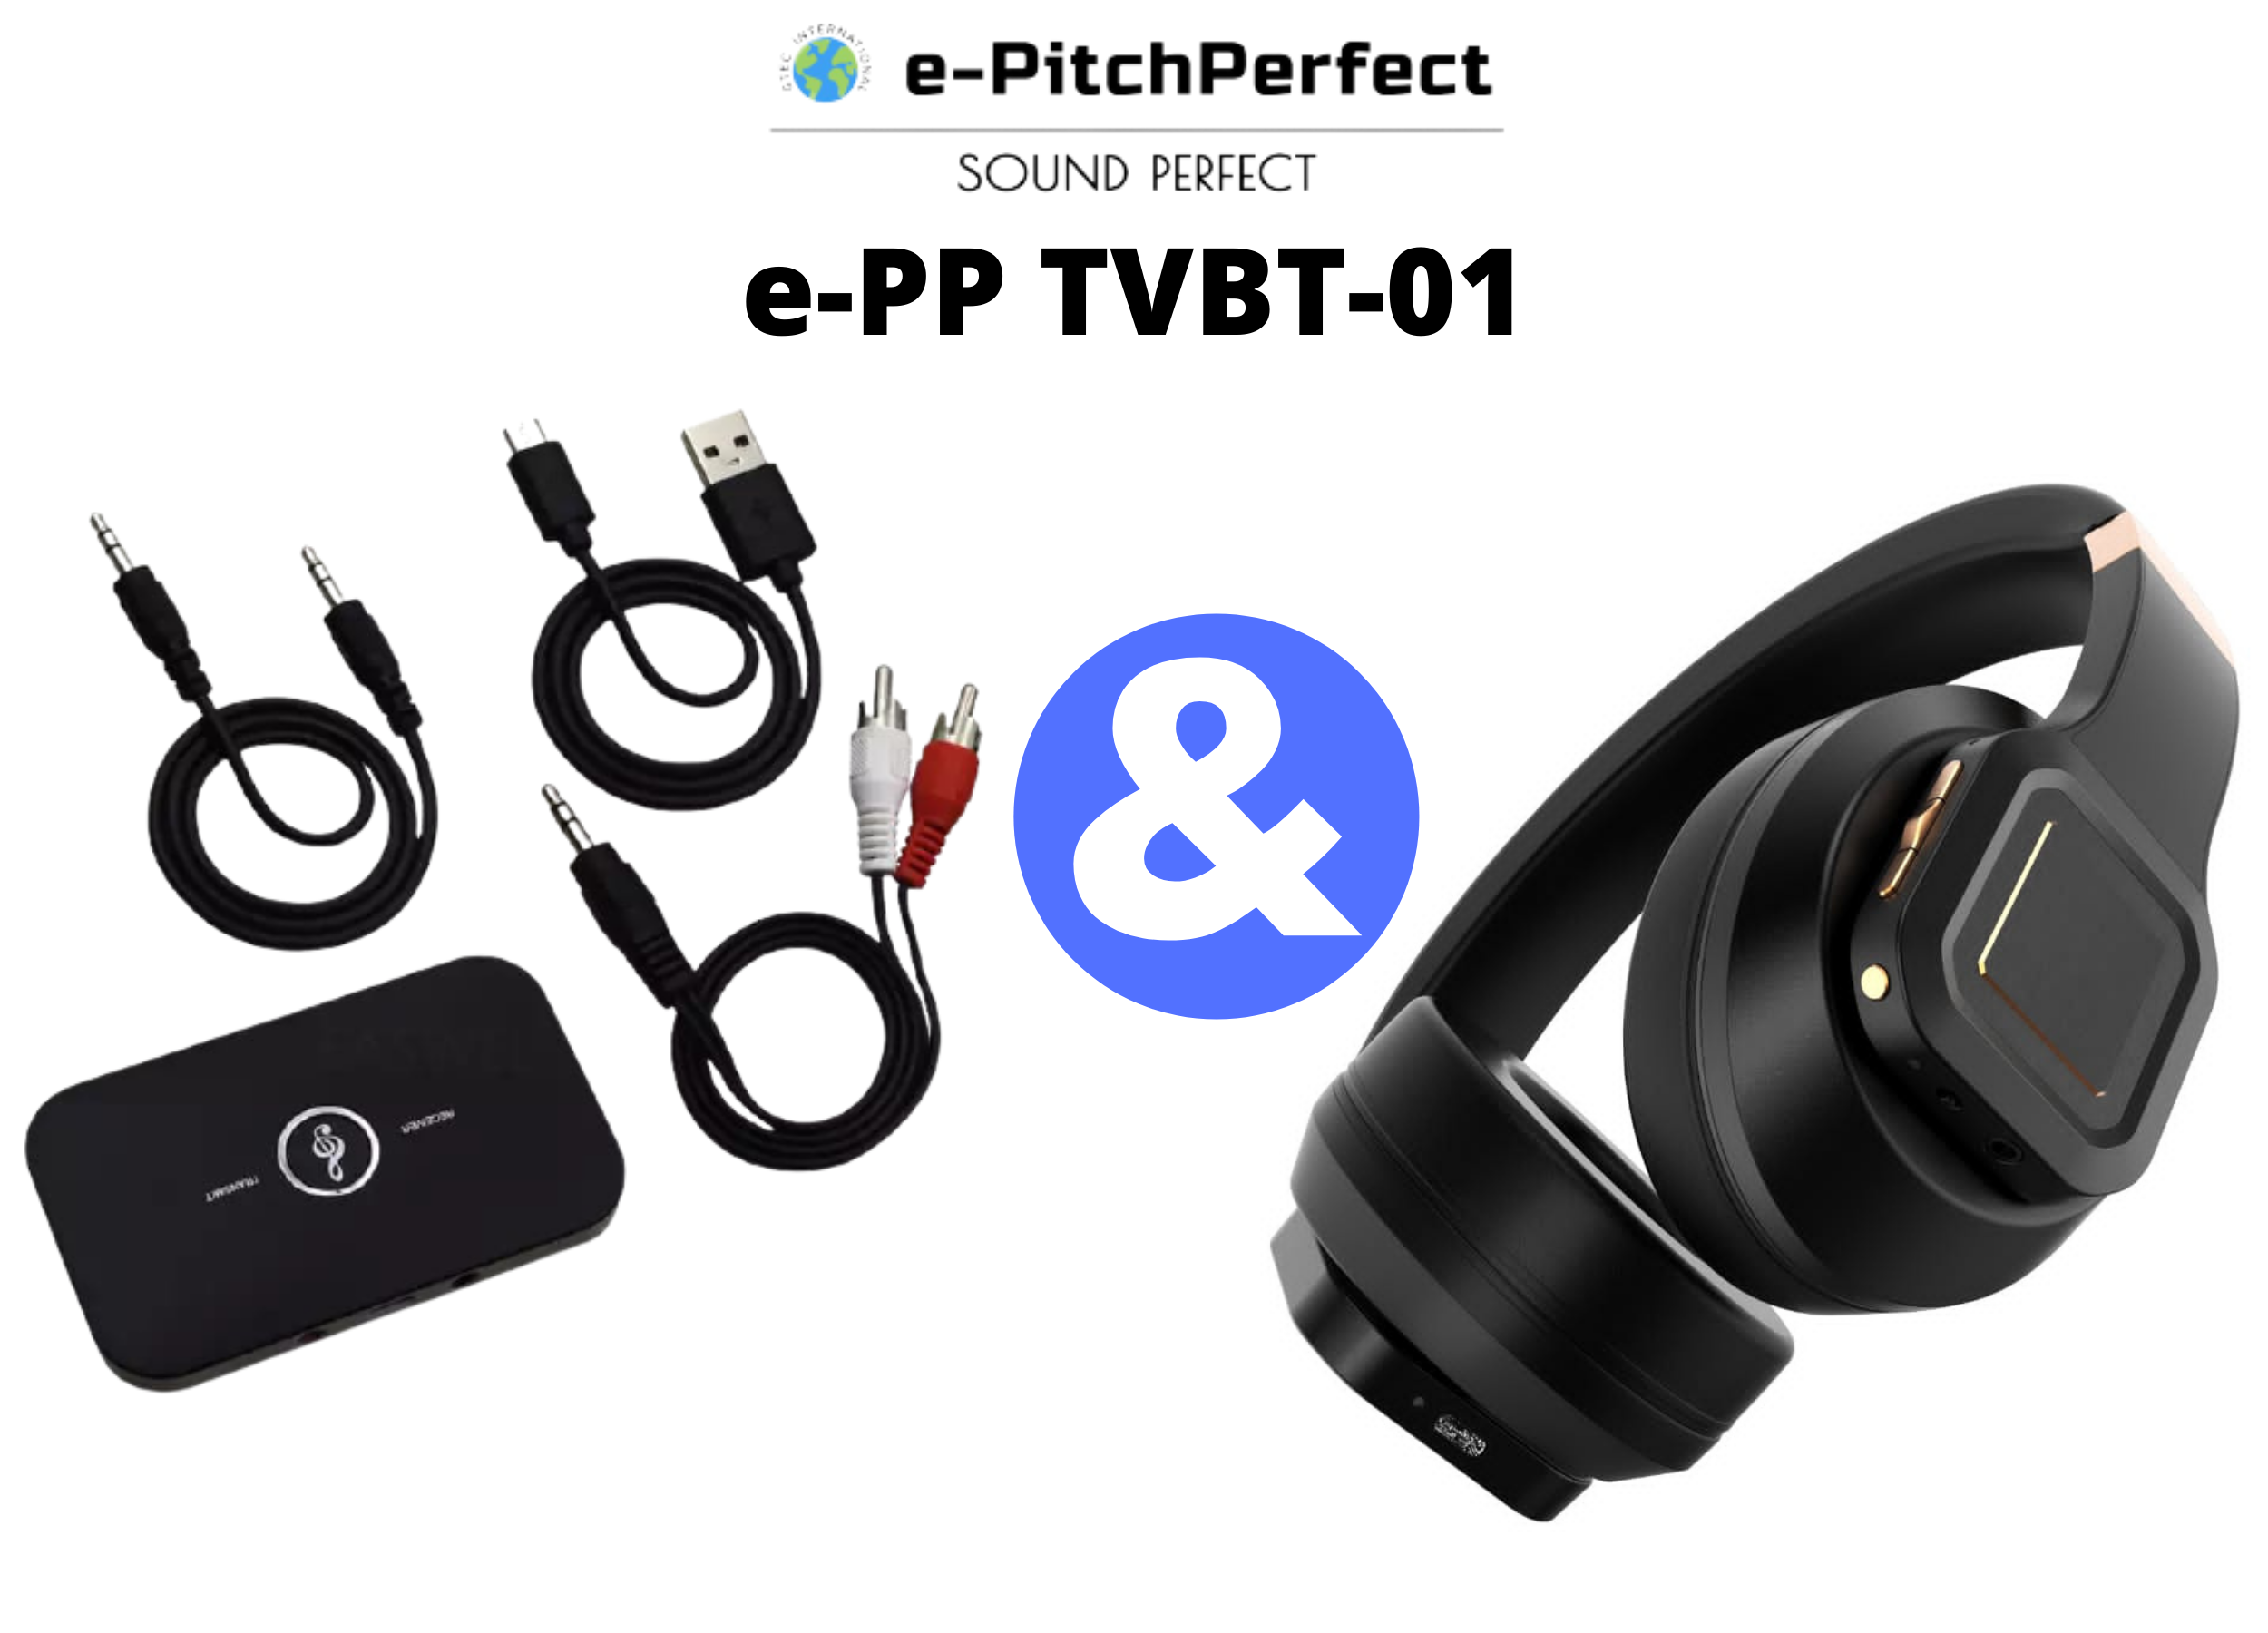 e-PP TVBT-01：TV EAR 蓝牙个人电视收听系统由蓝牙耳机 e-PP - ANC-BT 和 BT Tx/Rx 蓝牙音频发射器/接收器组成。可以安全地与大多数类型的助听器一起使用。在美国设计和制造